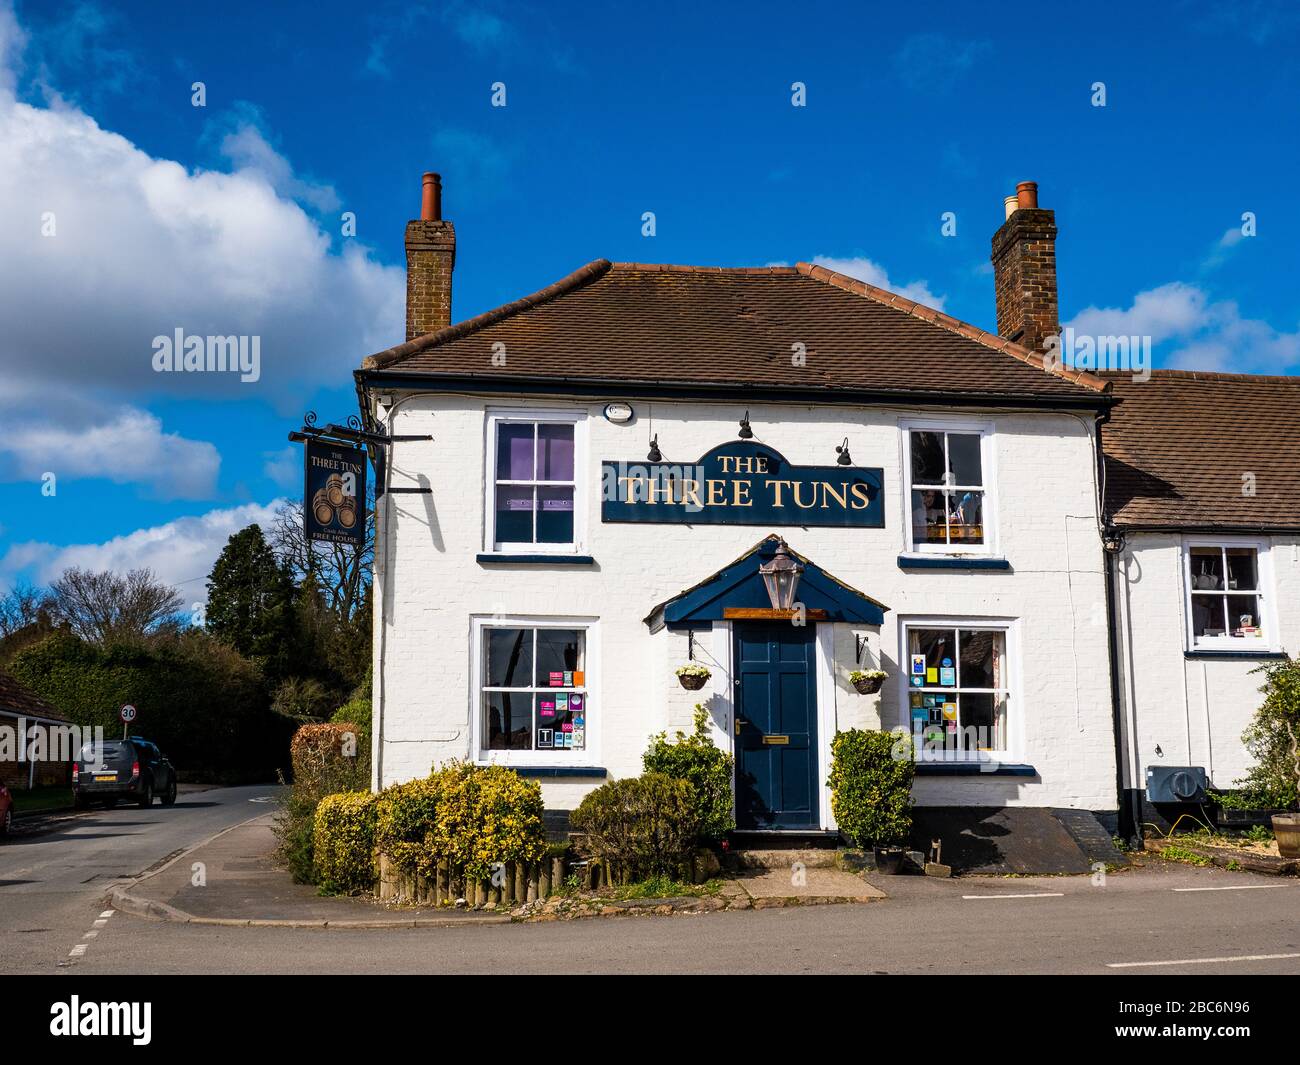 The Three Tuns, Rural Pub, Great Bedwyn, Wiltshire, Inghilterra, Regno Unito, GB. Foto Stock